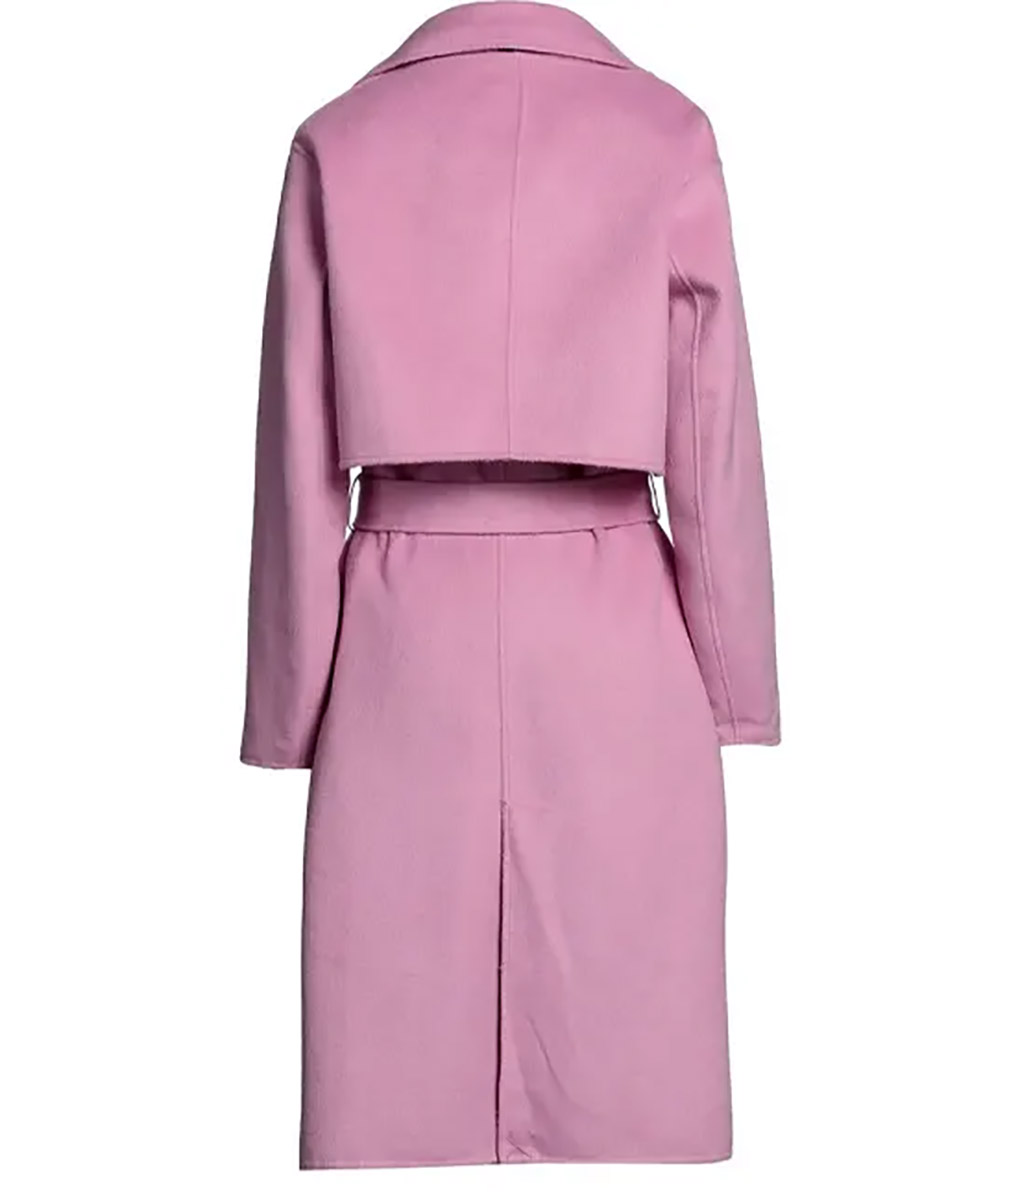 Lauren Elliott Crimes of Fashion Pink Coat (3)